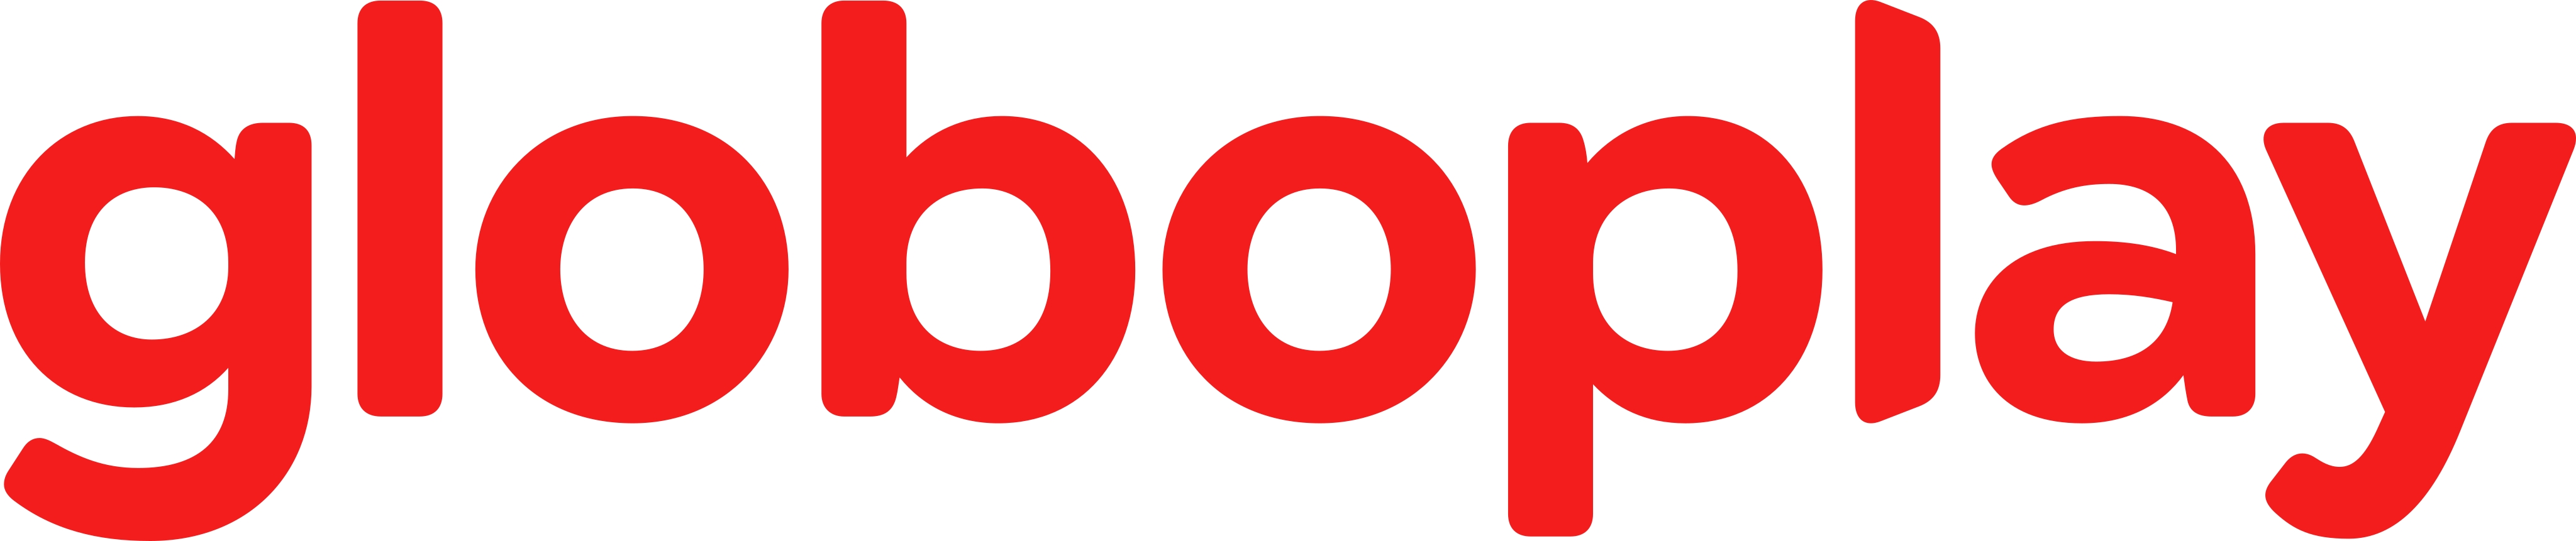 Globoplay Logo.